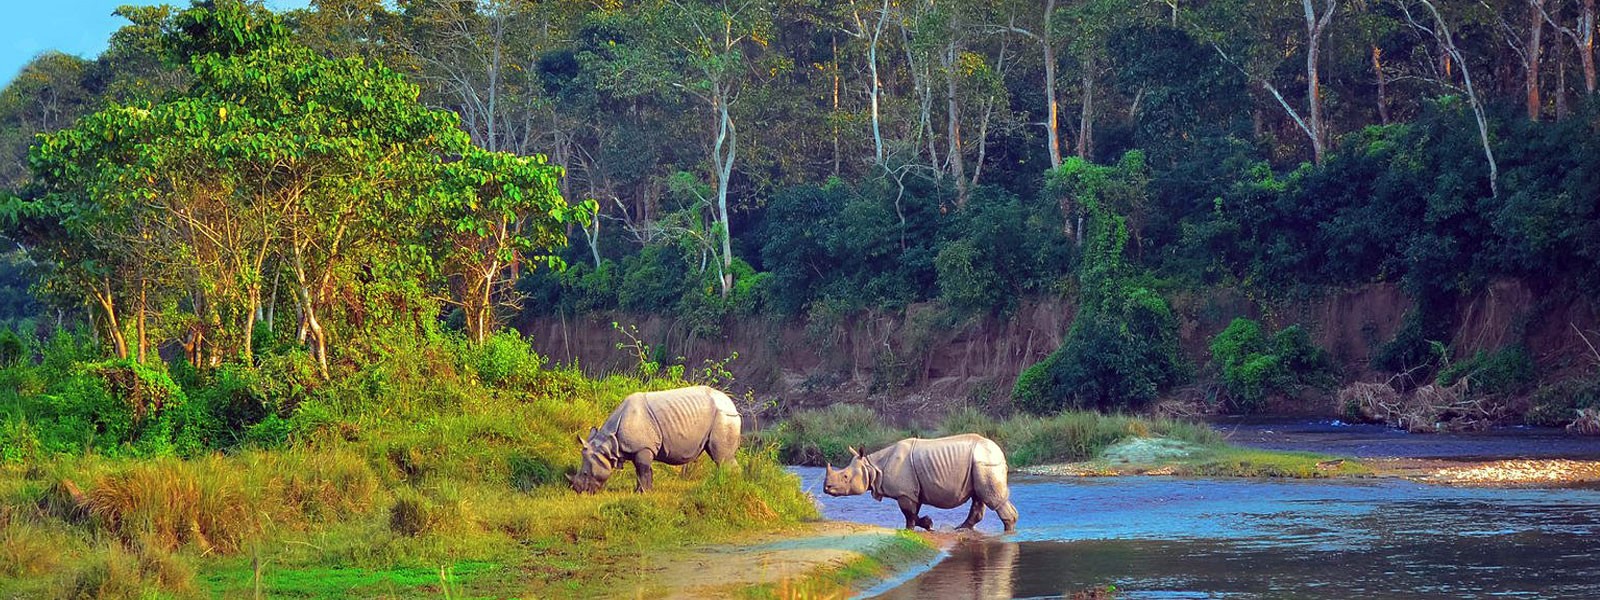 Jungle Safari Tour in Nepal